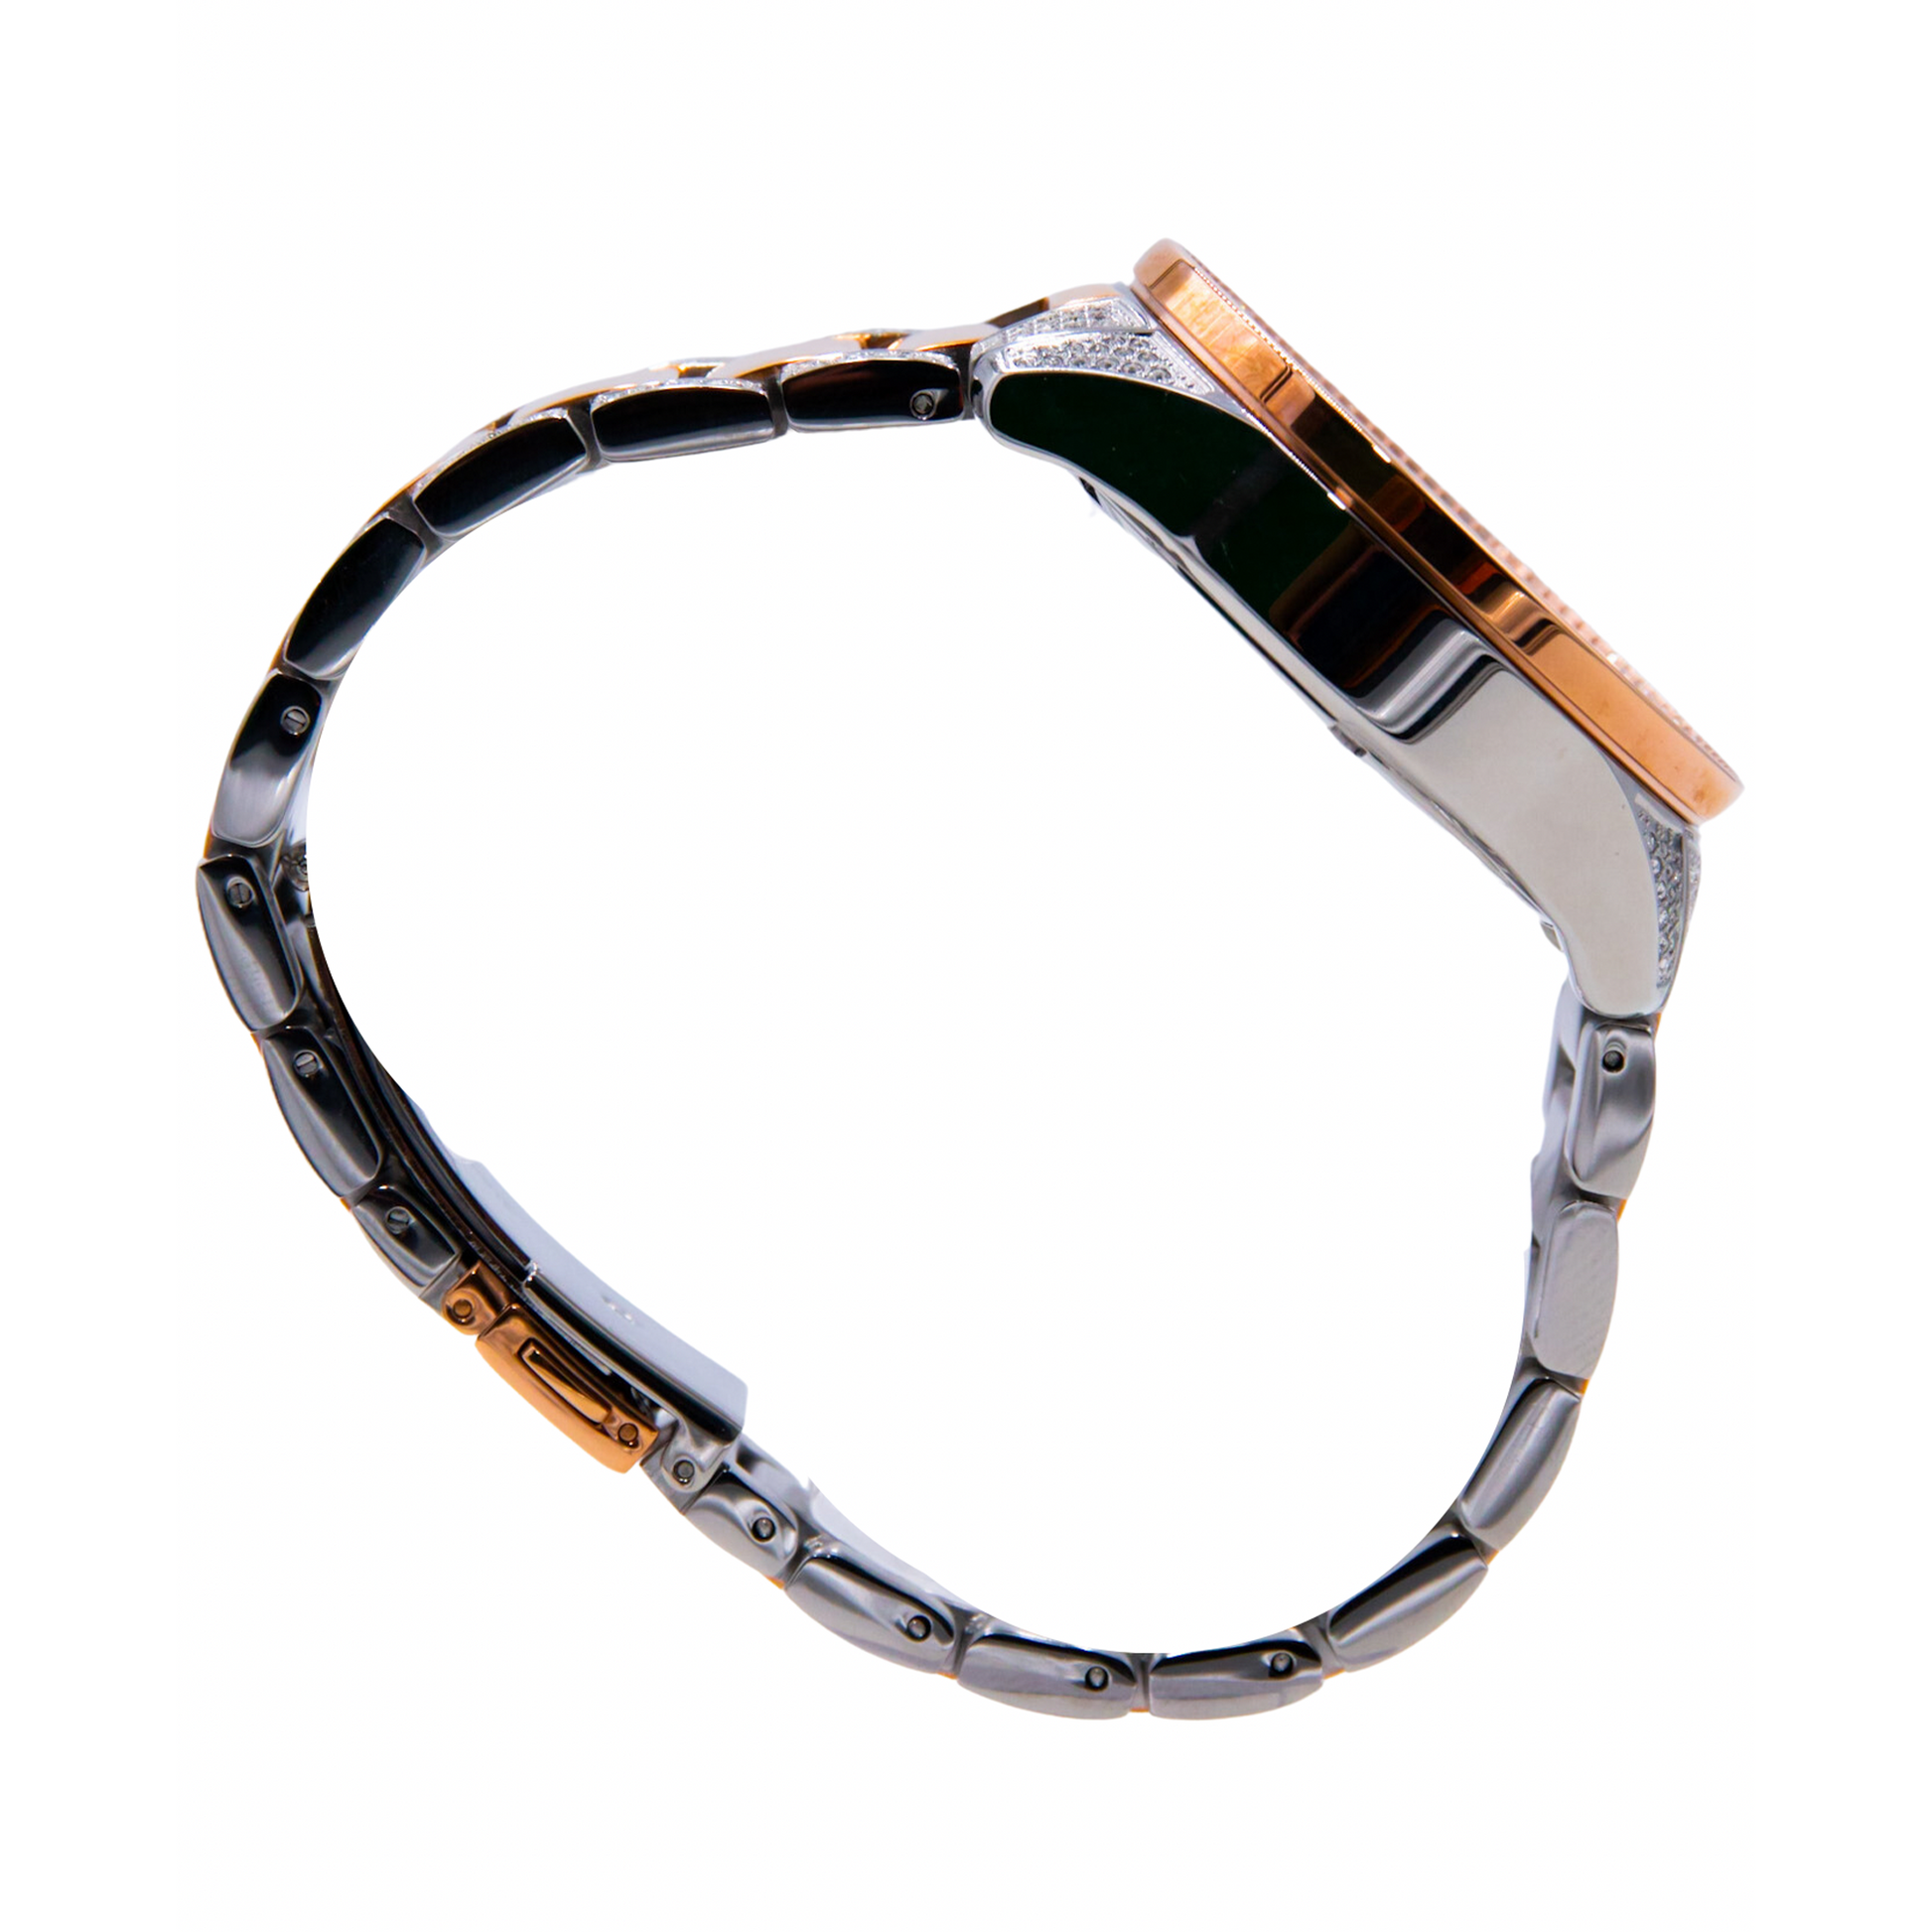 Michael Kors Women's Wren Quartz Stainless Steel Strap Two Tone Watch MK6707 - 796483451940 